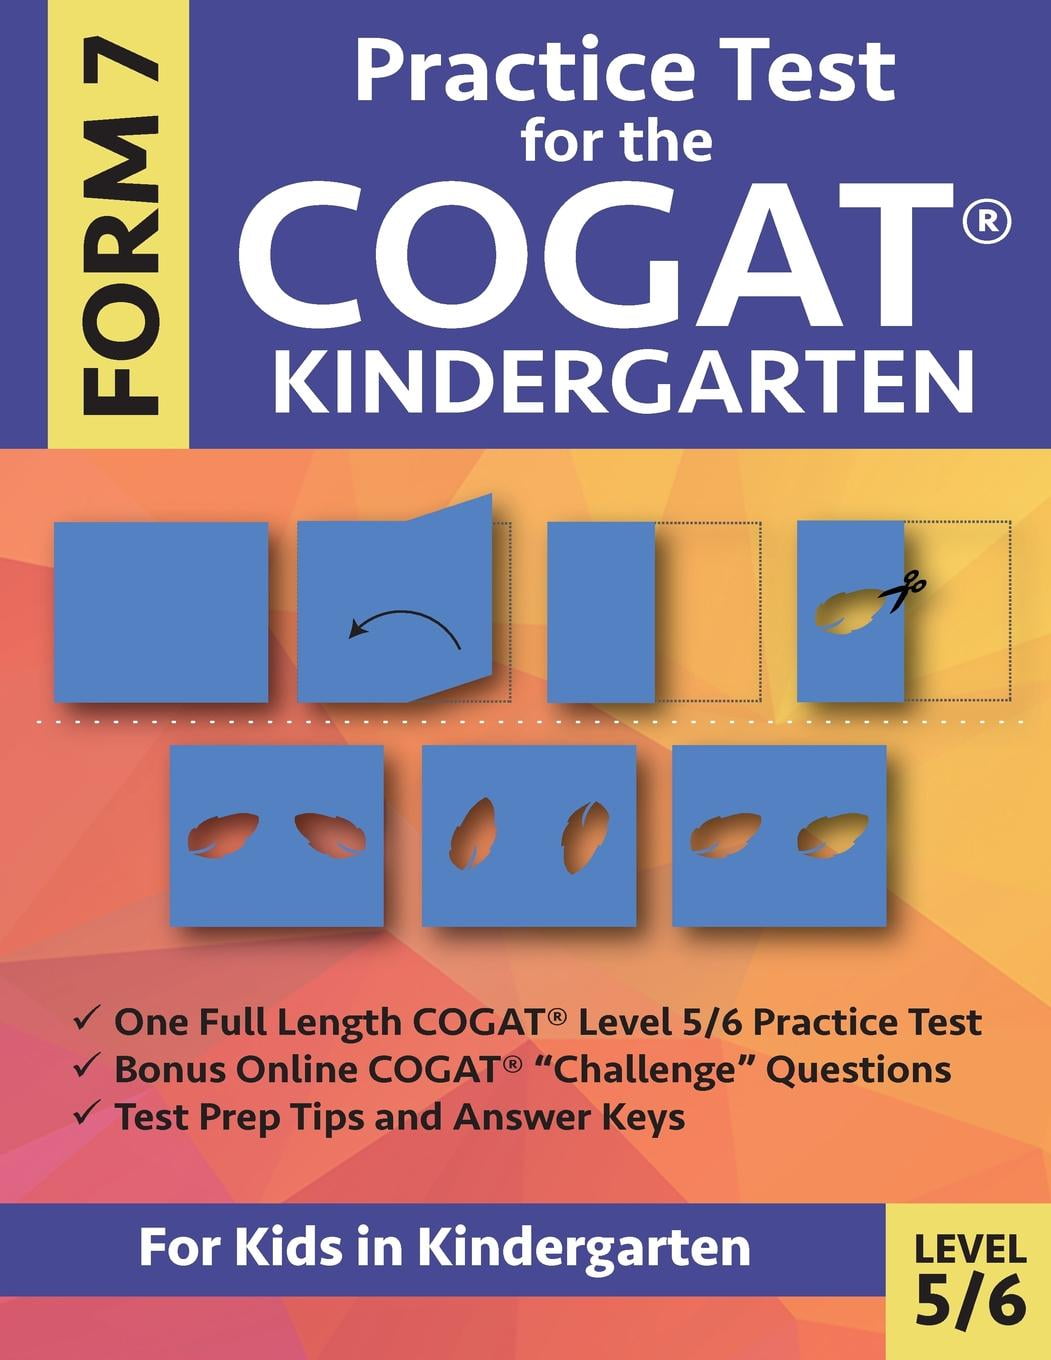 What Is Cogat Test For Kindergarten